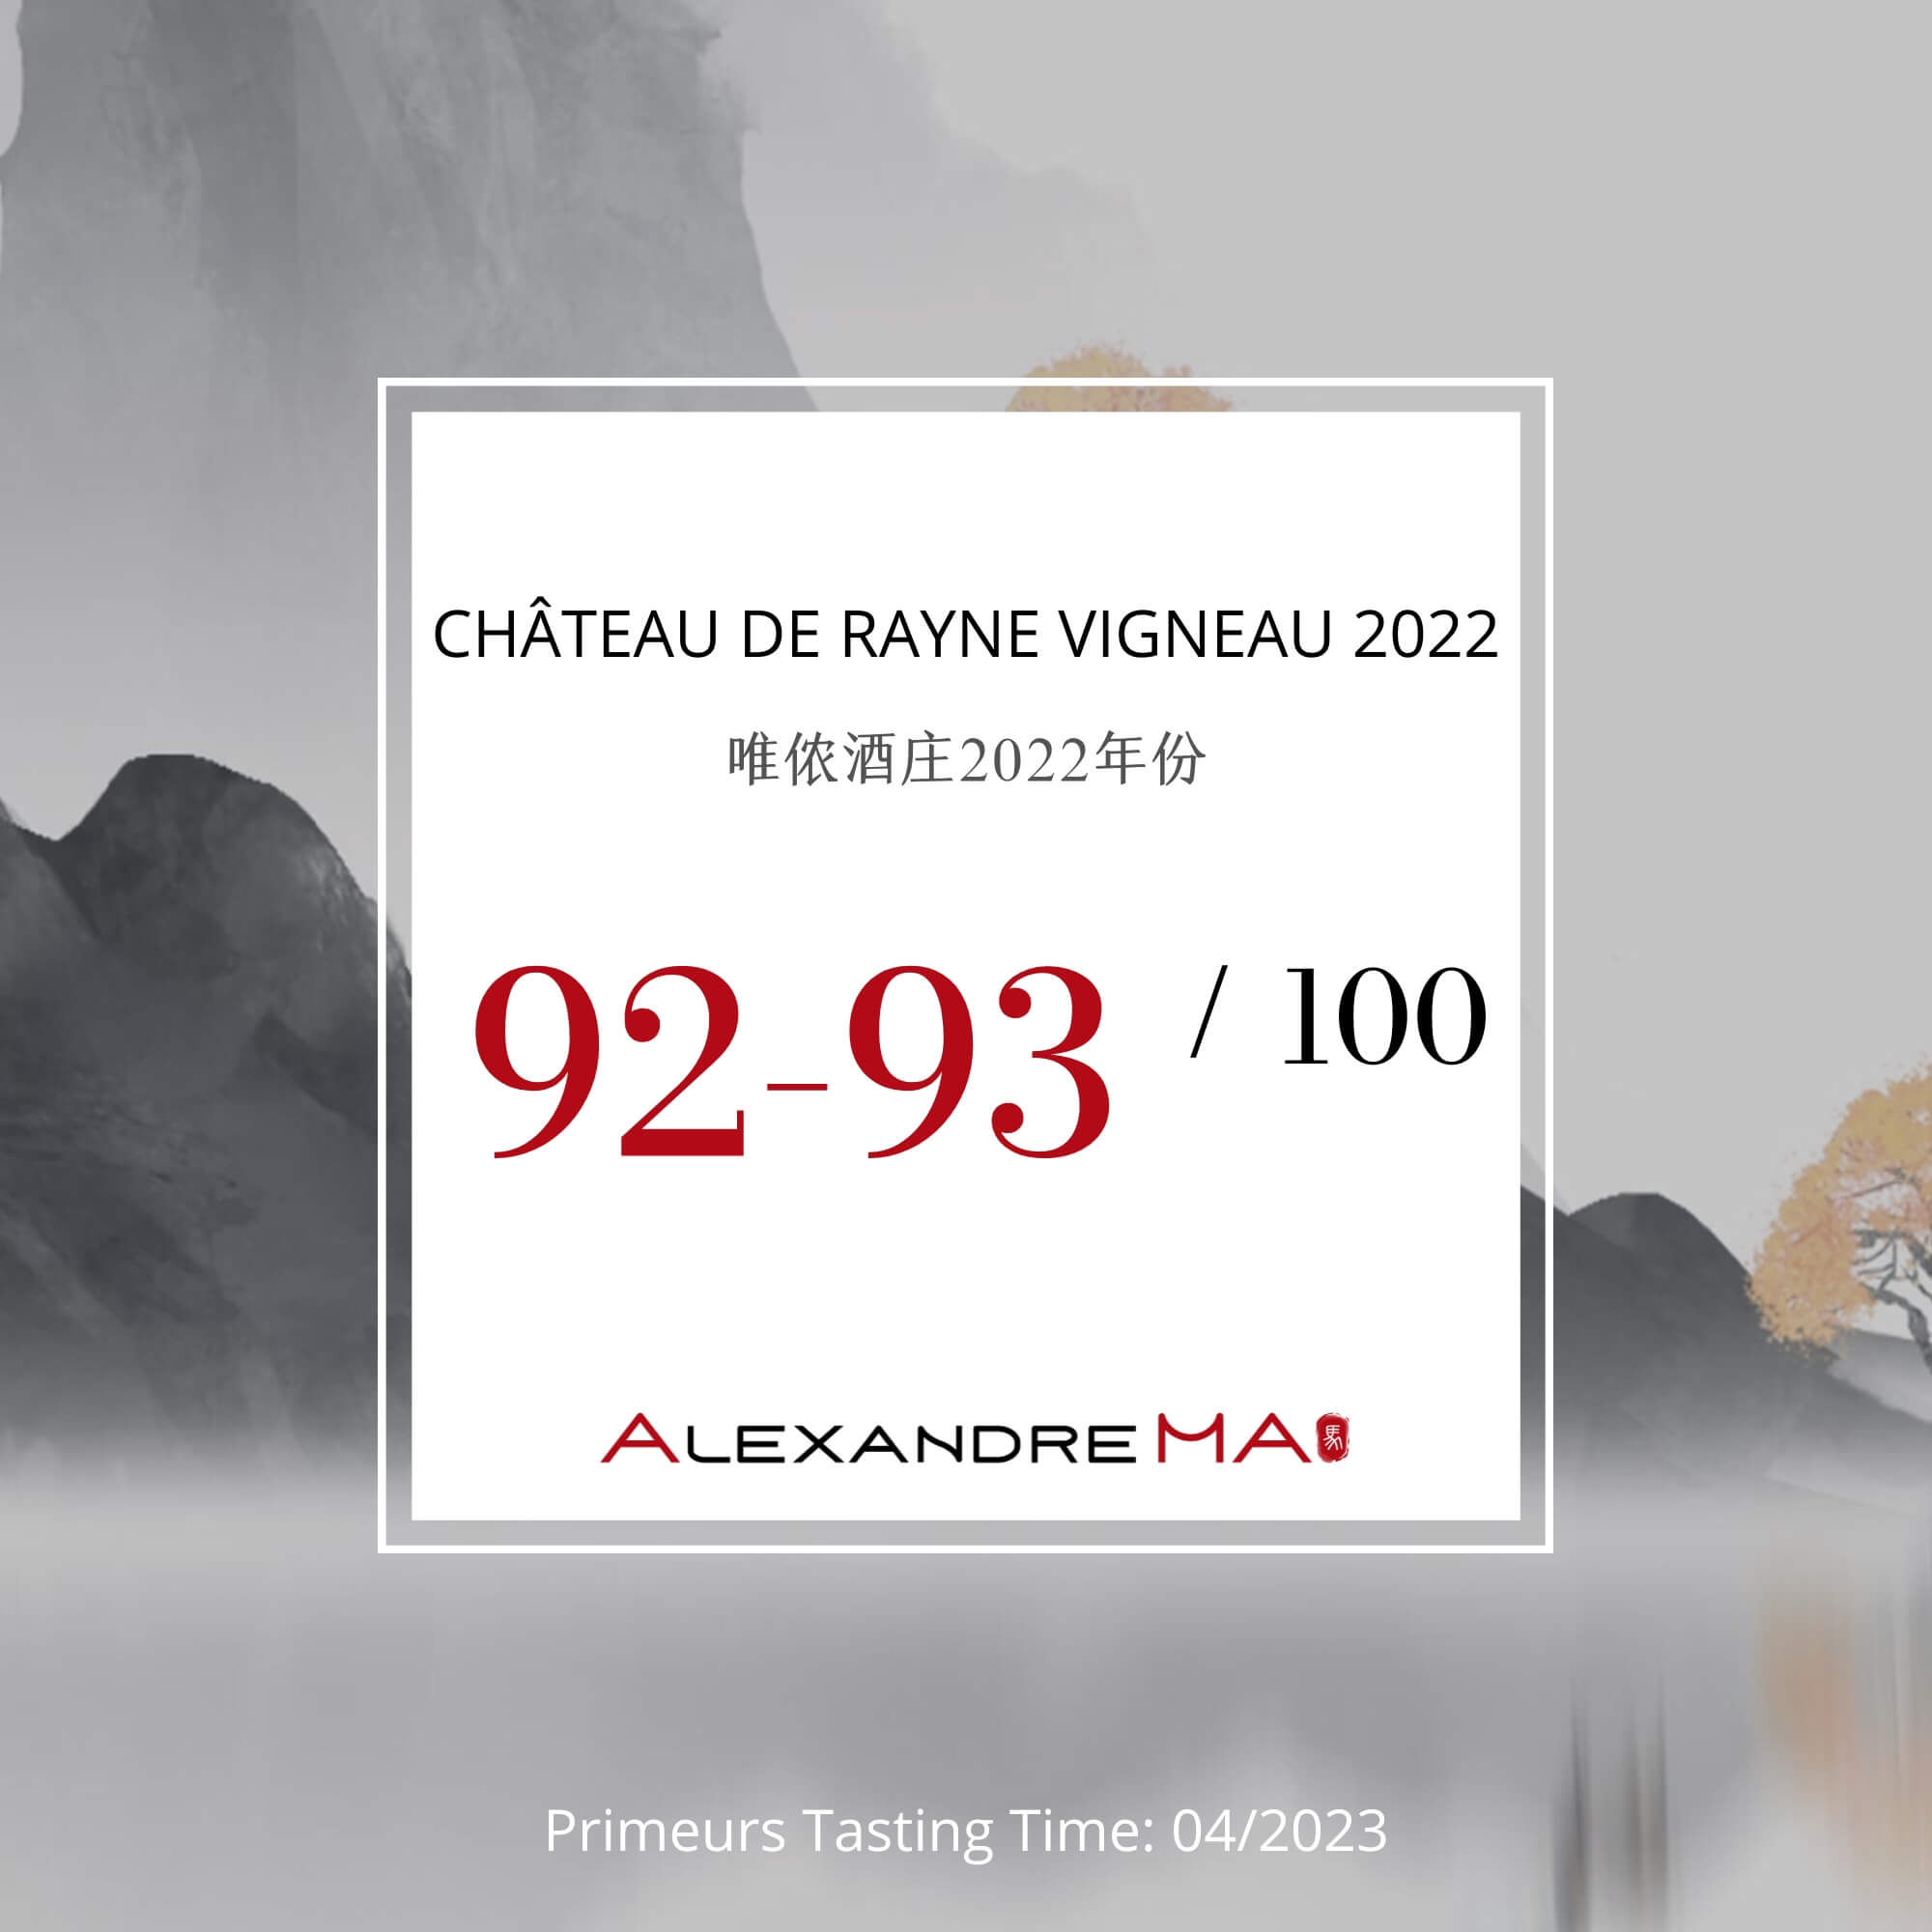 Château de Rayne Vigneau 2022 Primeurs - Alexandre MA